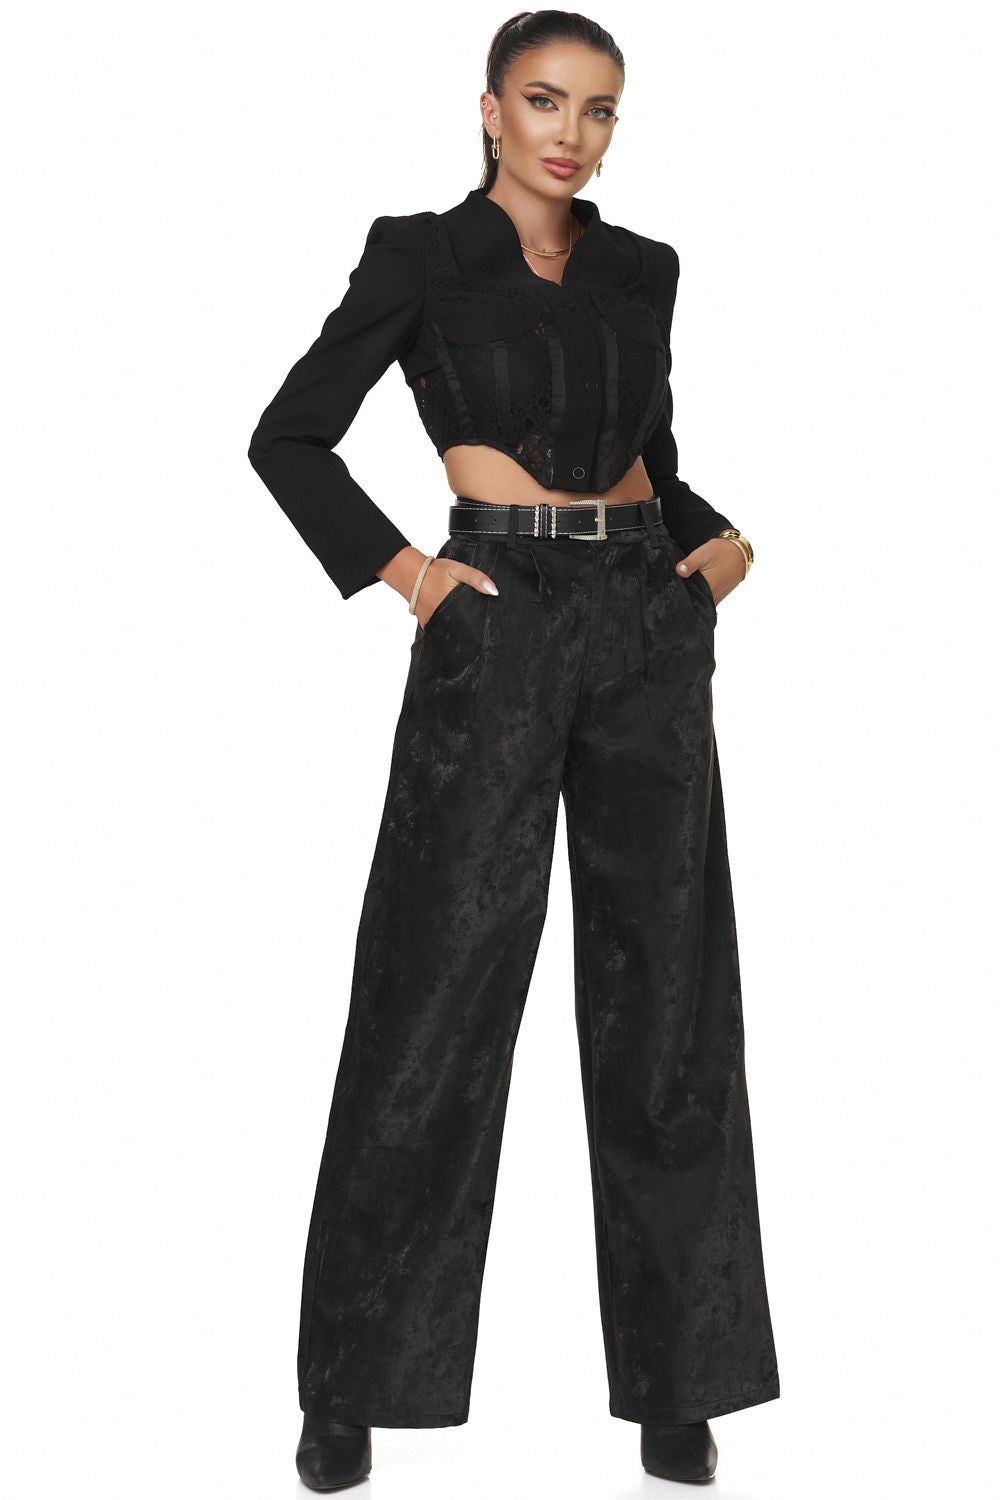 Ticaly Bogas black elegant ladies trousers